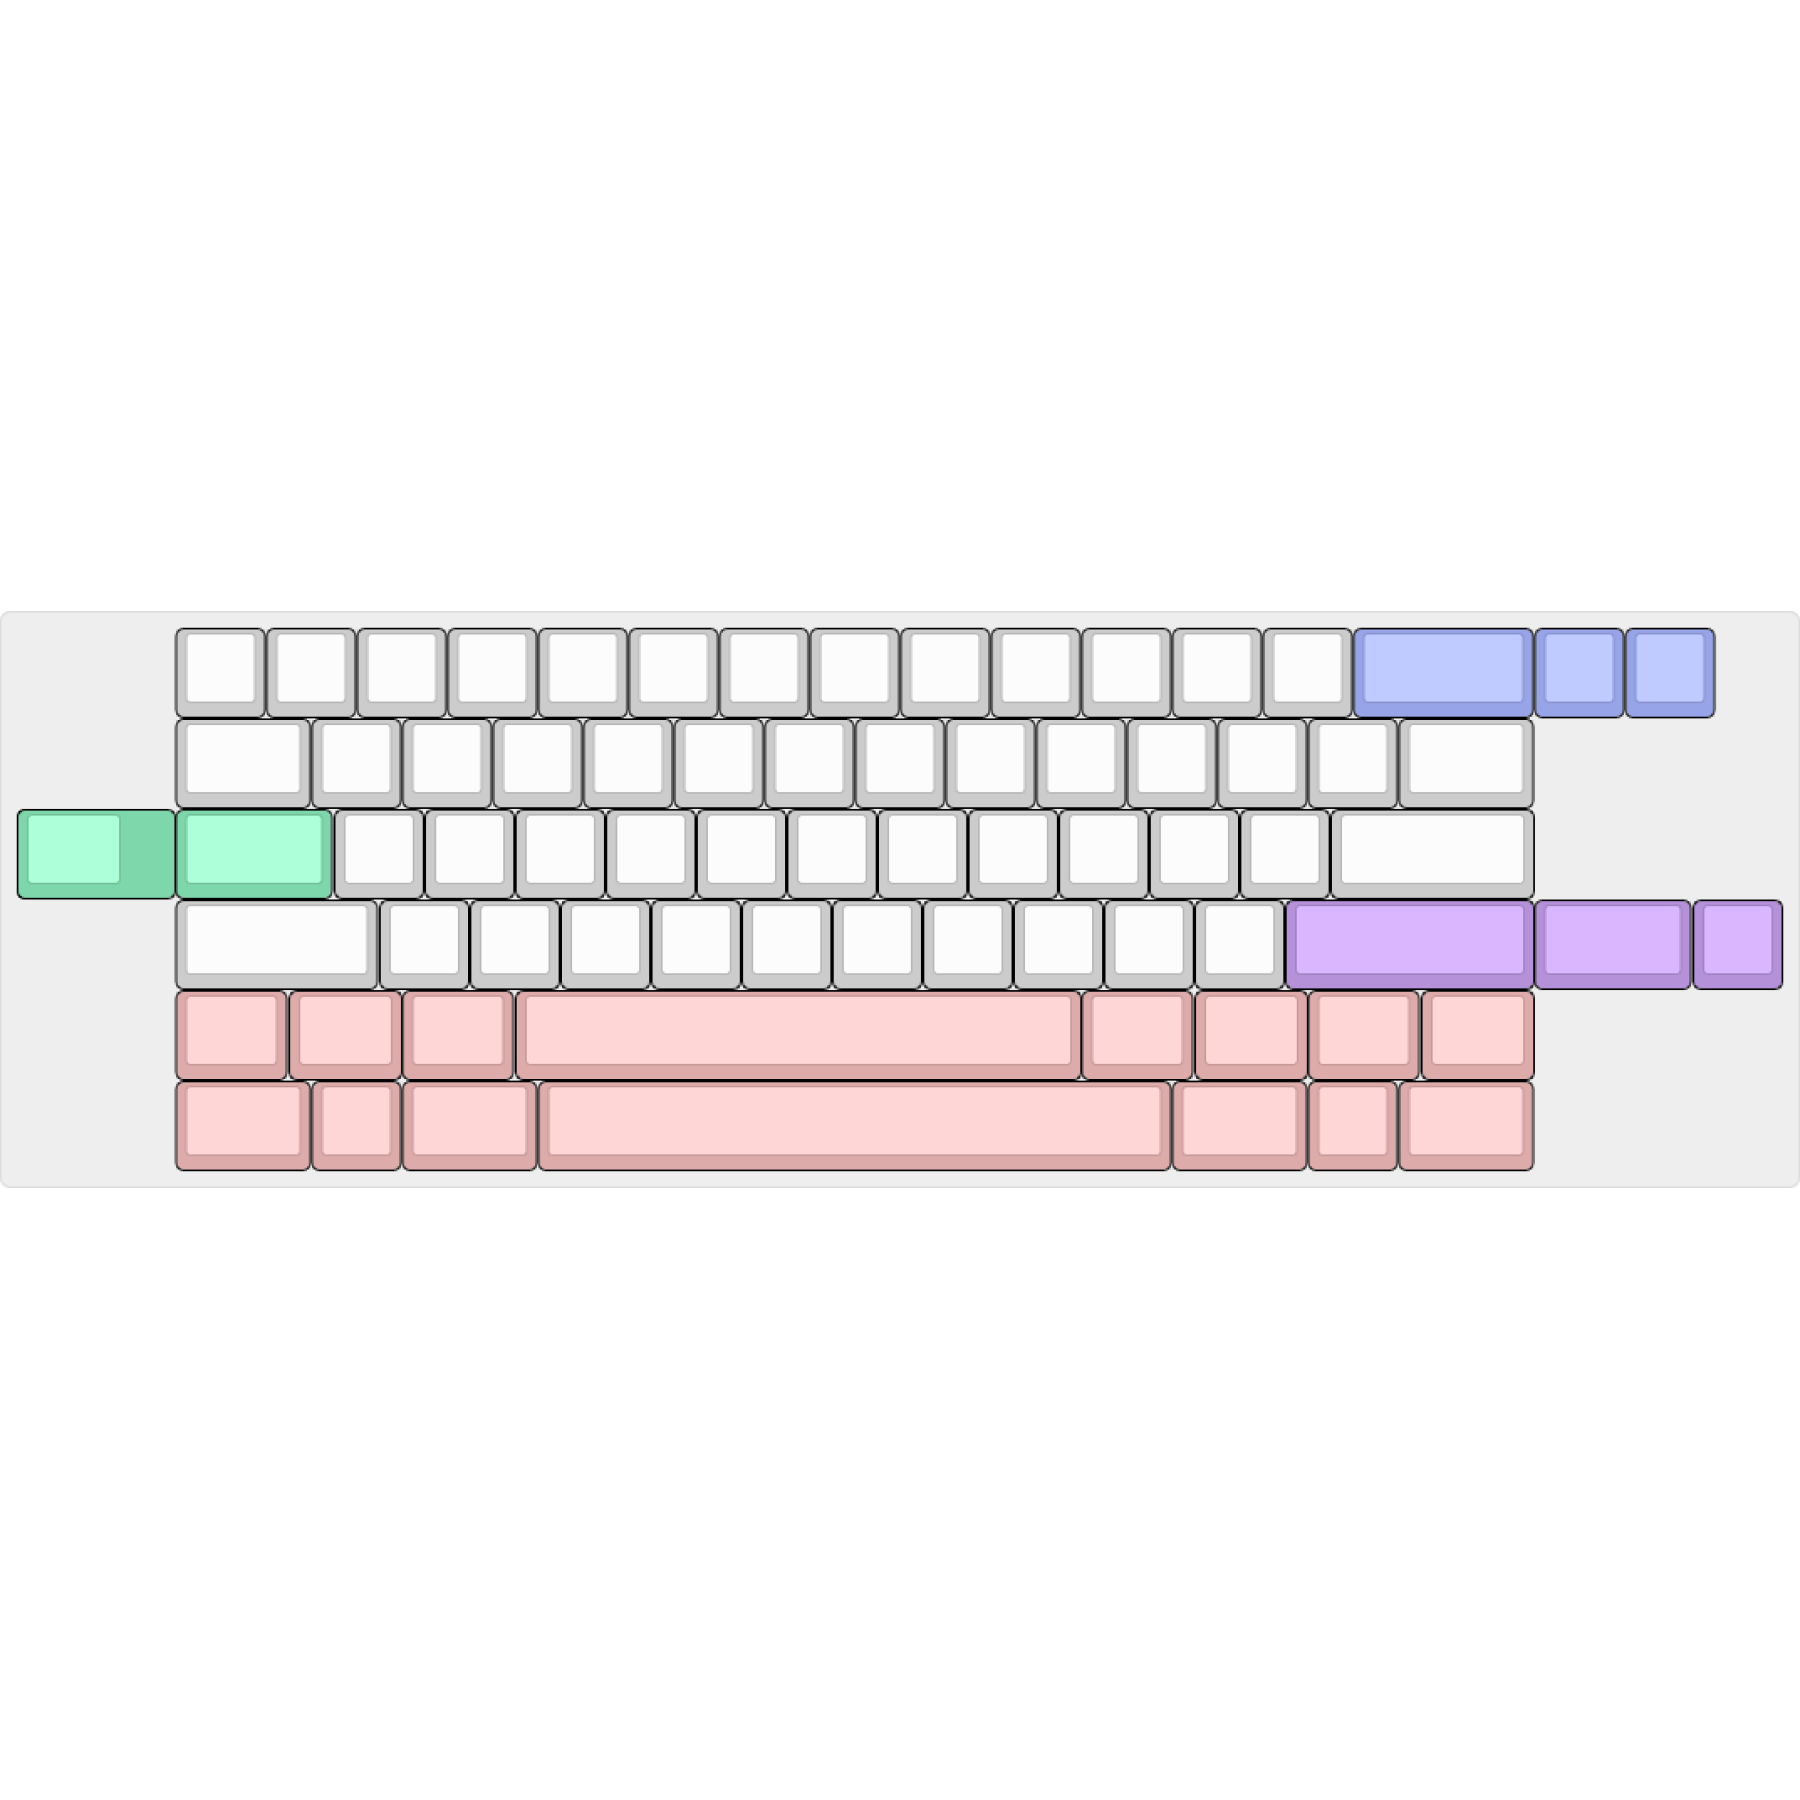 Ciel 60% Keyboard Kit